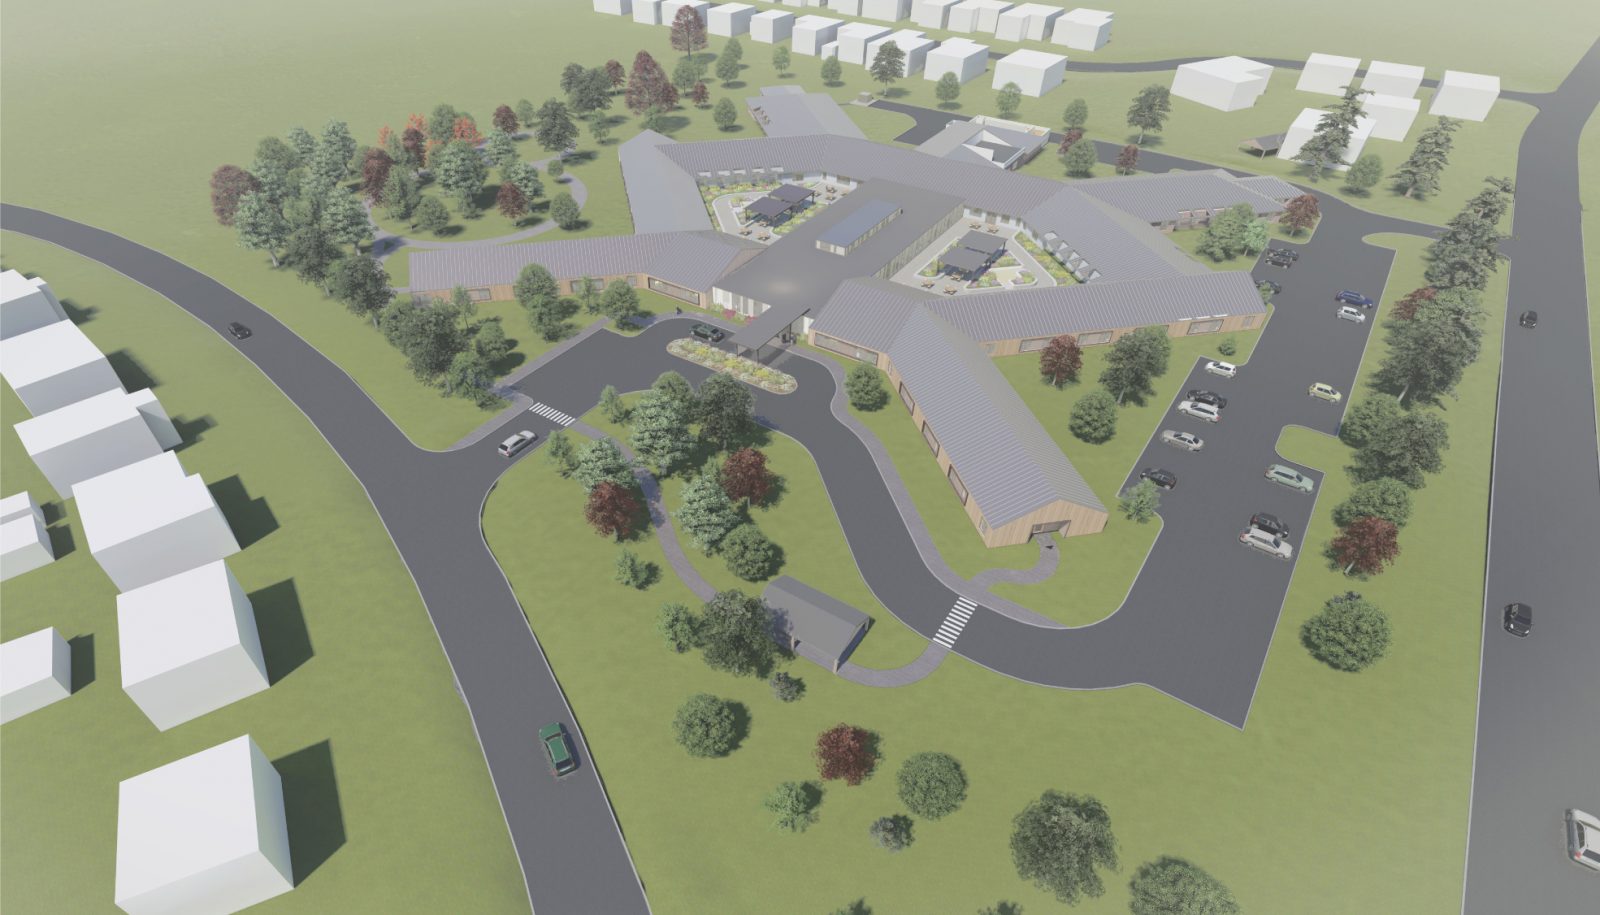 Woodland Villa plans 33k sq. ft. expansion